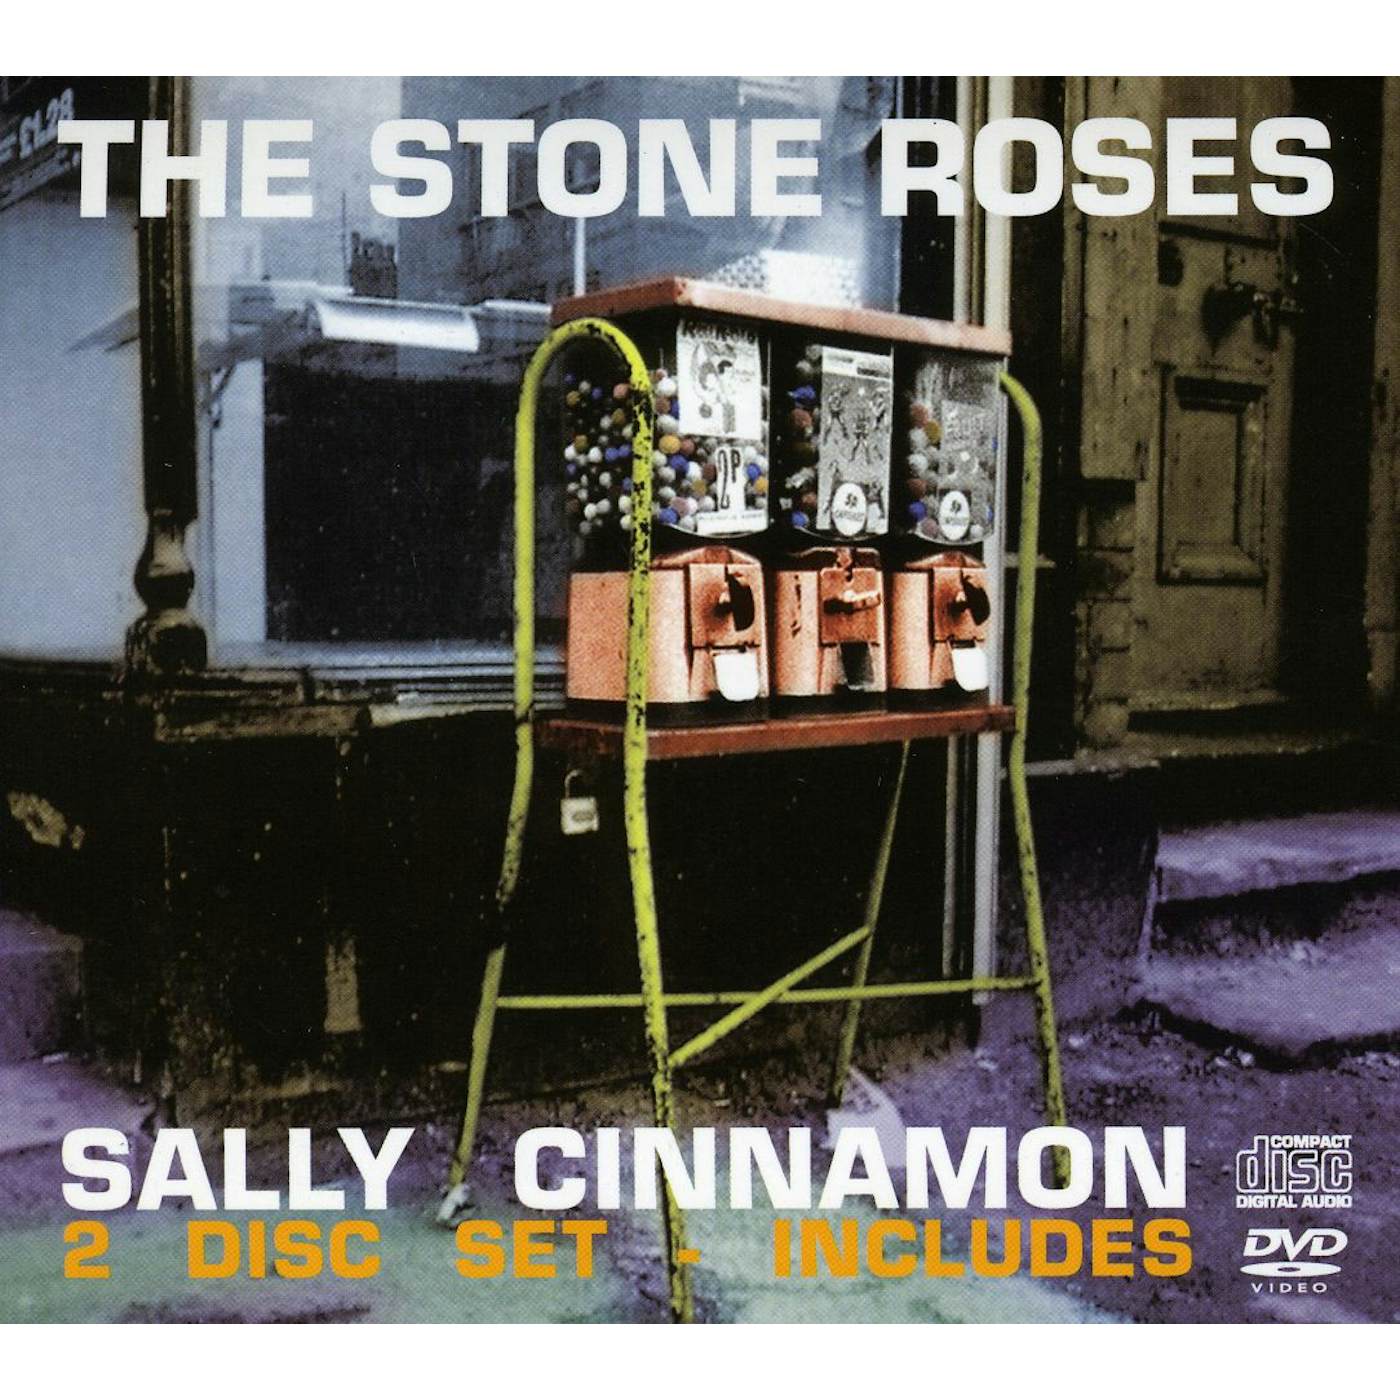 The Stone Roses SALLY CINNAMON CD